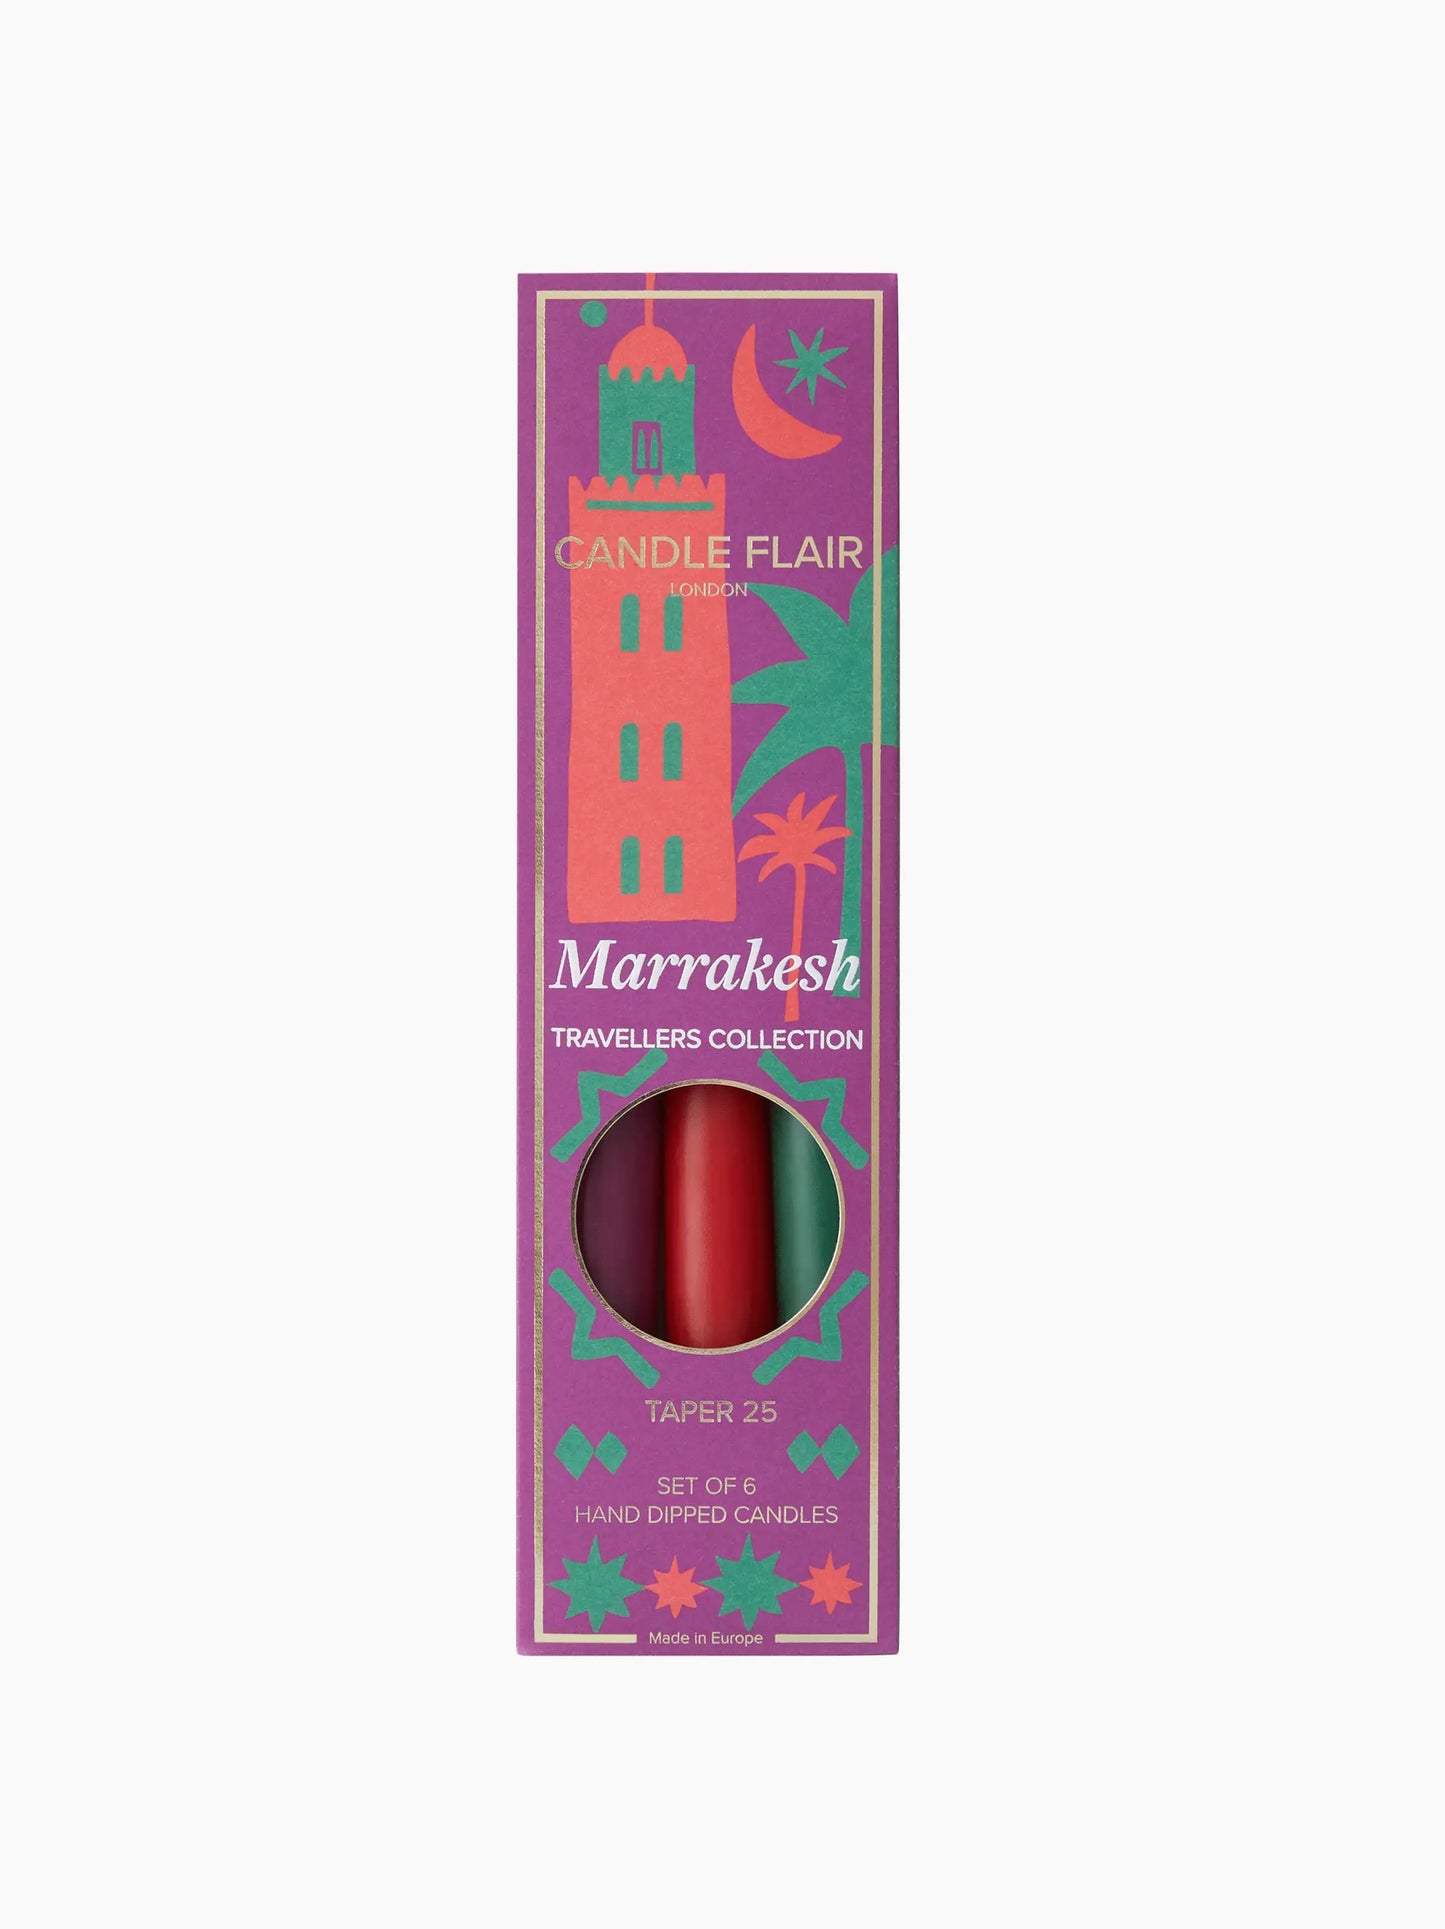 Marrakech Candle Set